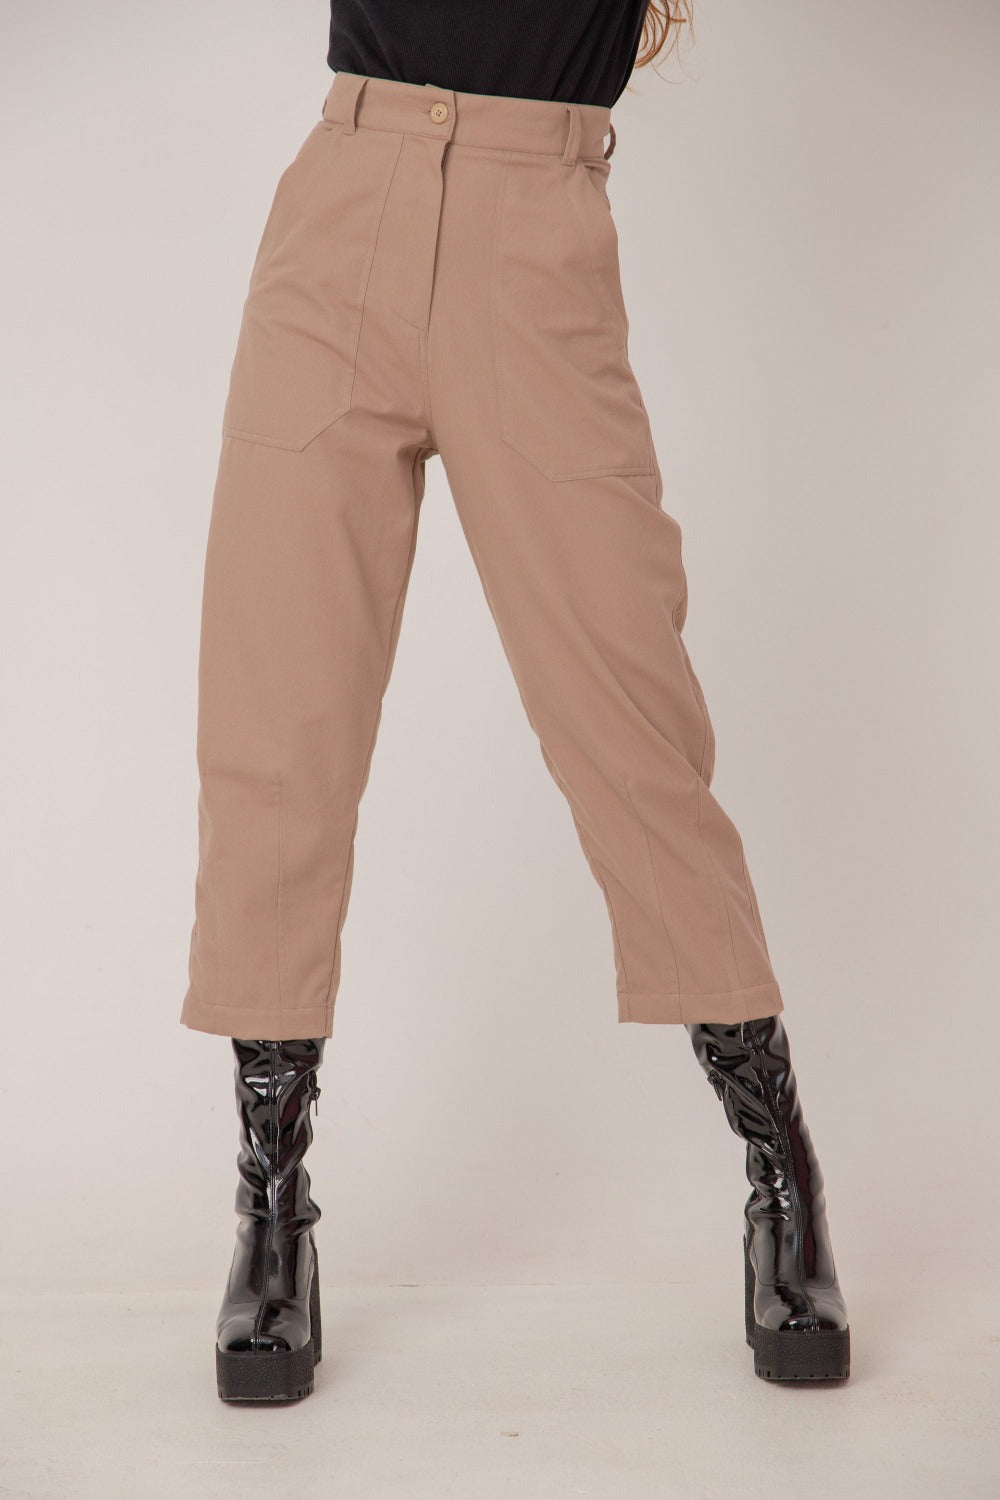 High rise waist crop pants in carrot leg design: /OISHI/